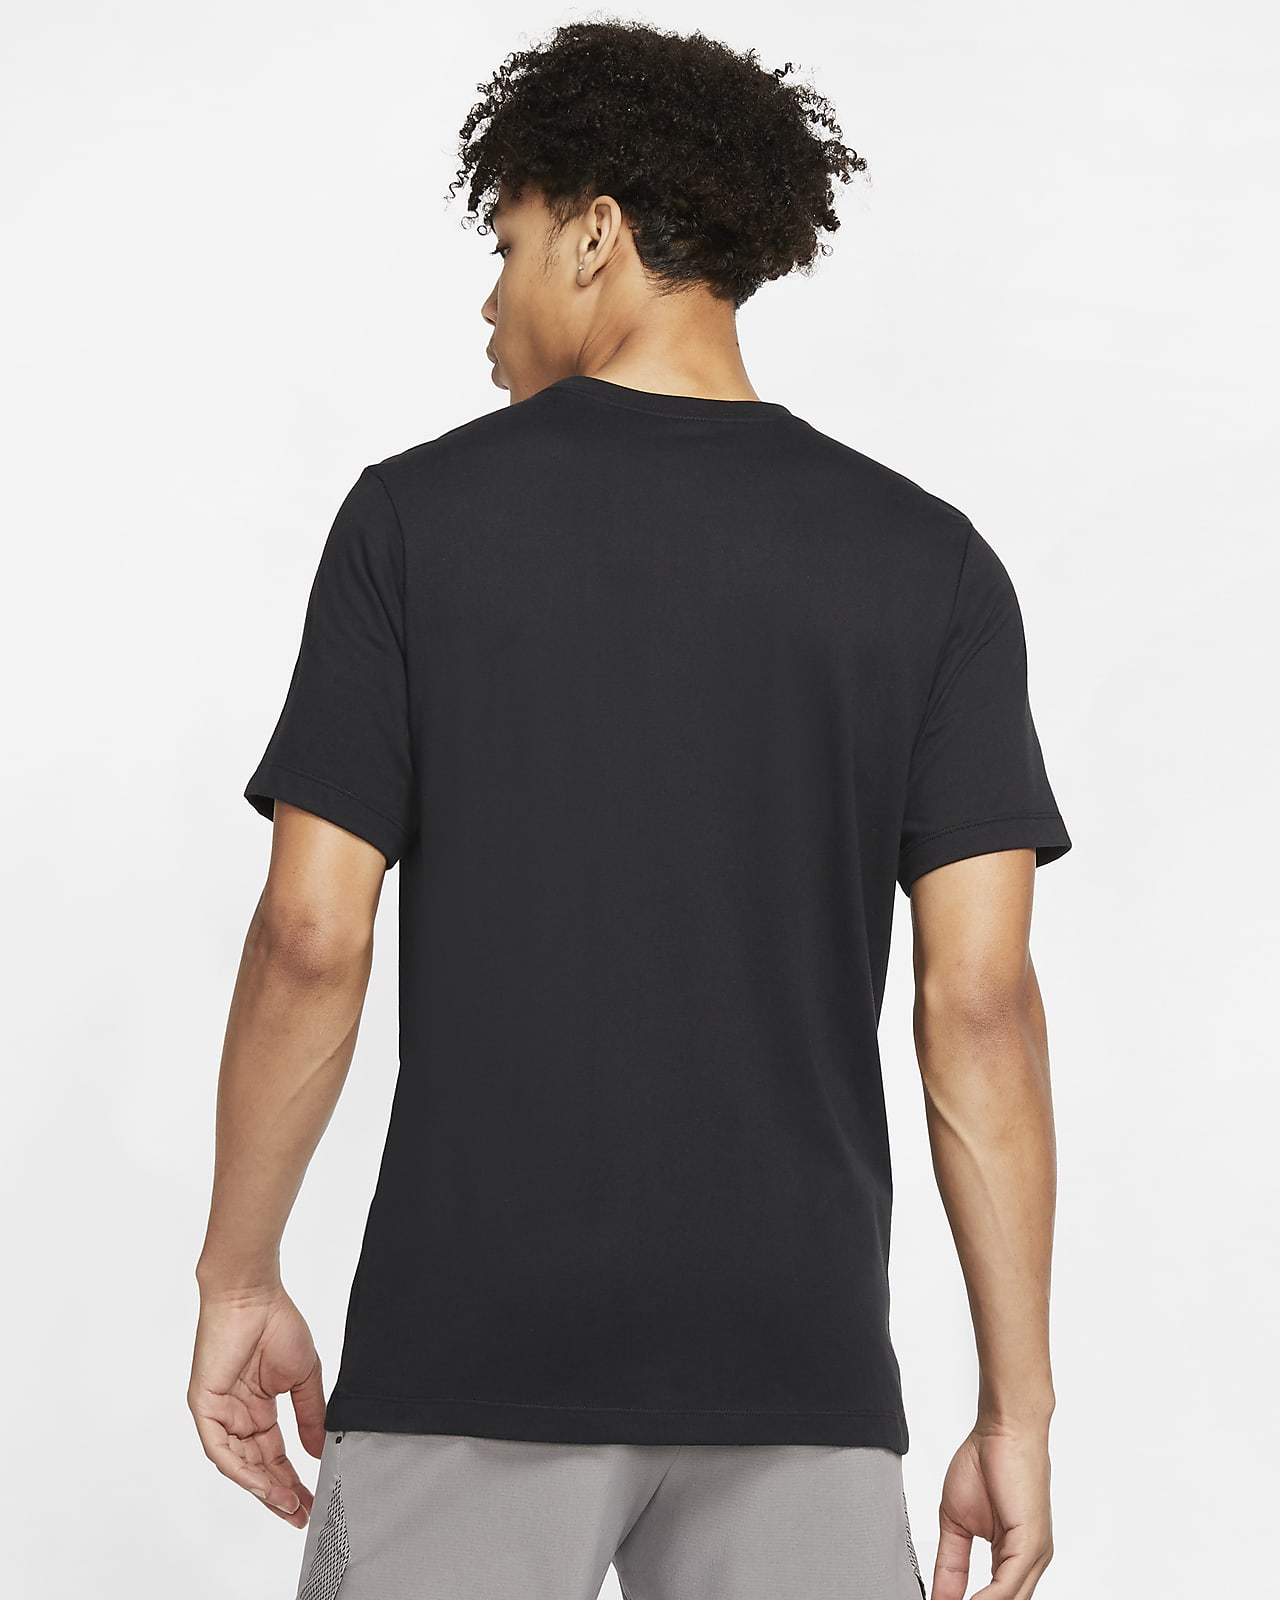 Nike Dri-FIT “Just Do It” Graphic Training T-Shirt - Men’s - Black